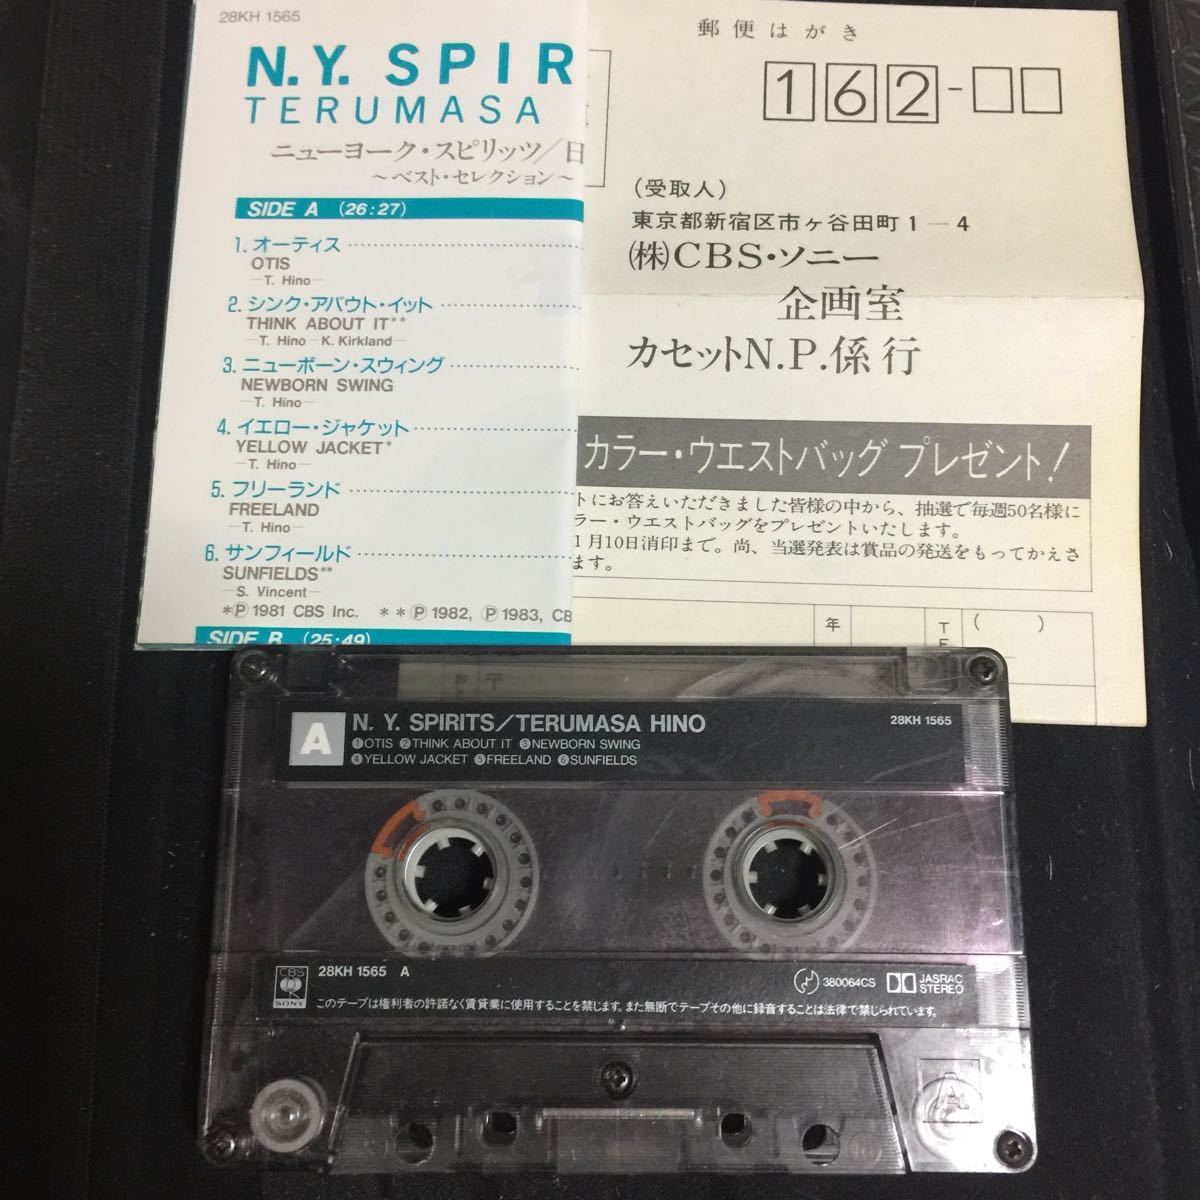  saec Terumasa New York * Spirits the best * selection domestic record cassette tape *